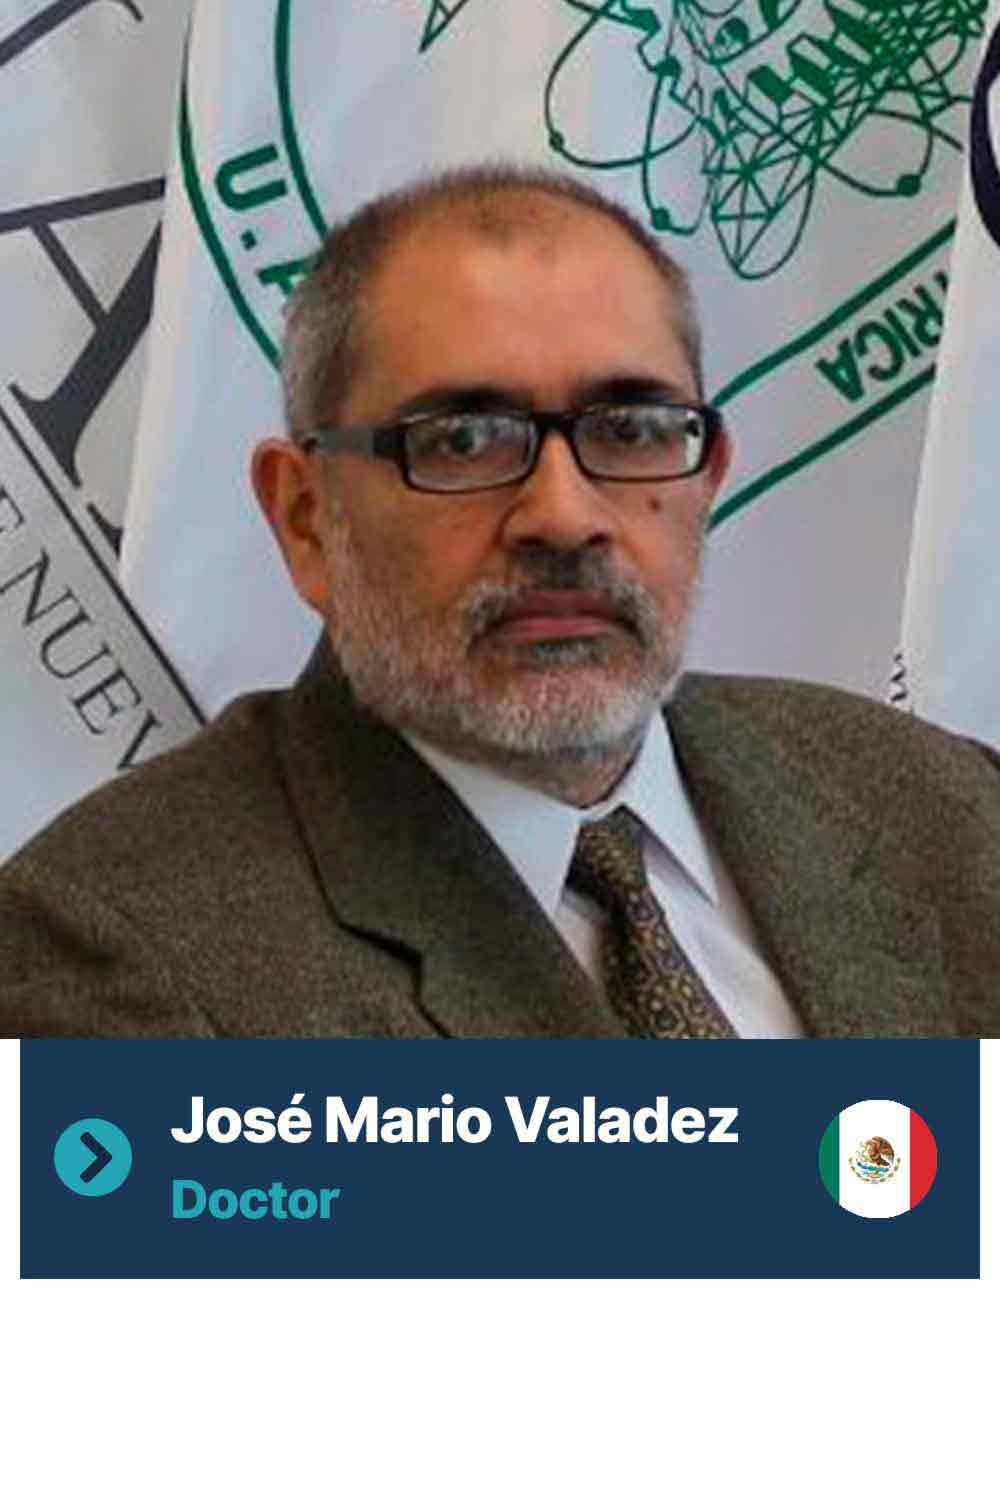 José Mario Valadez